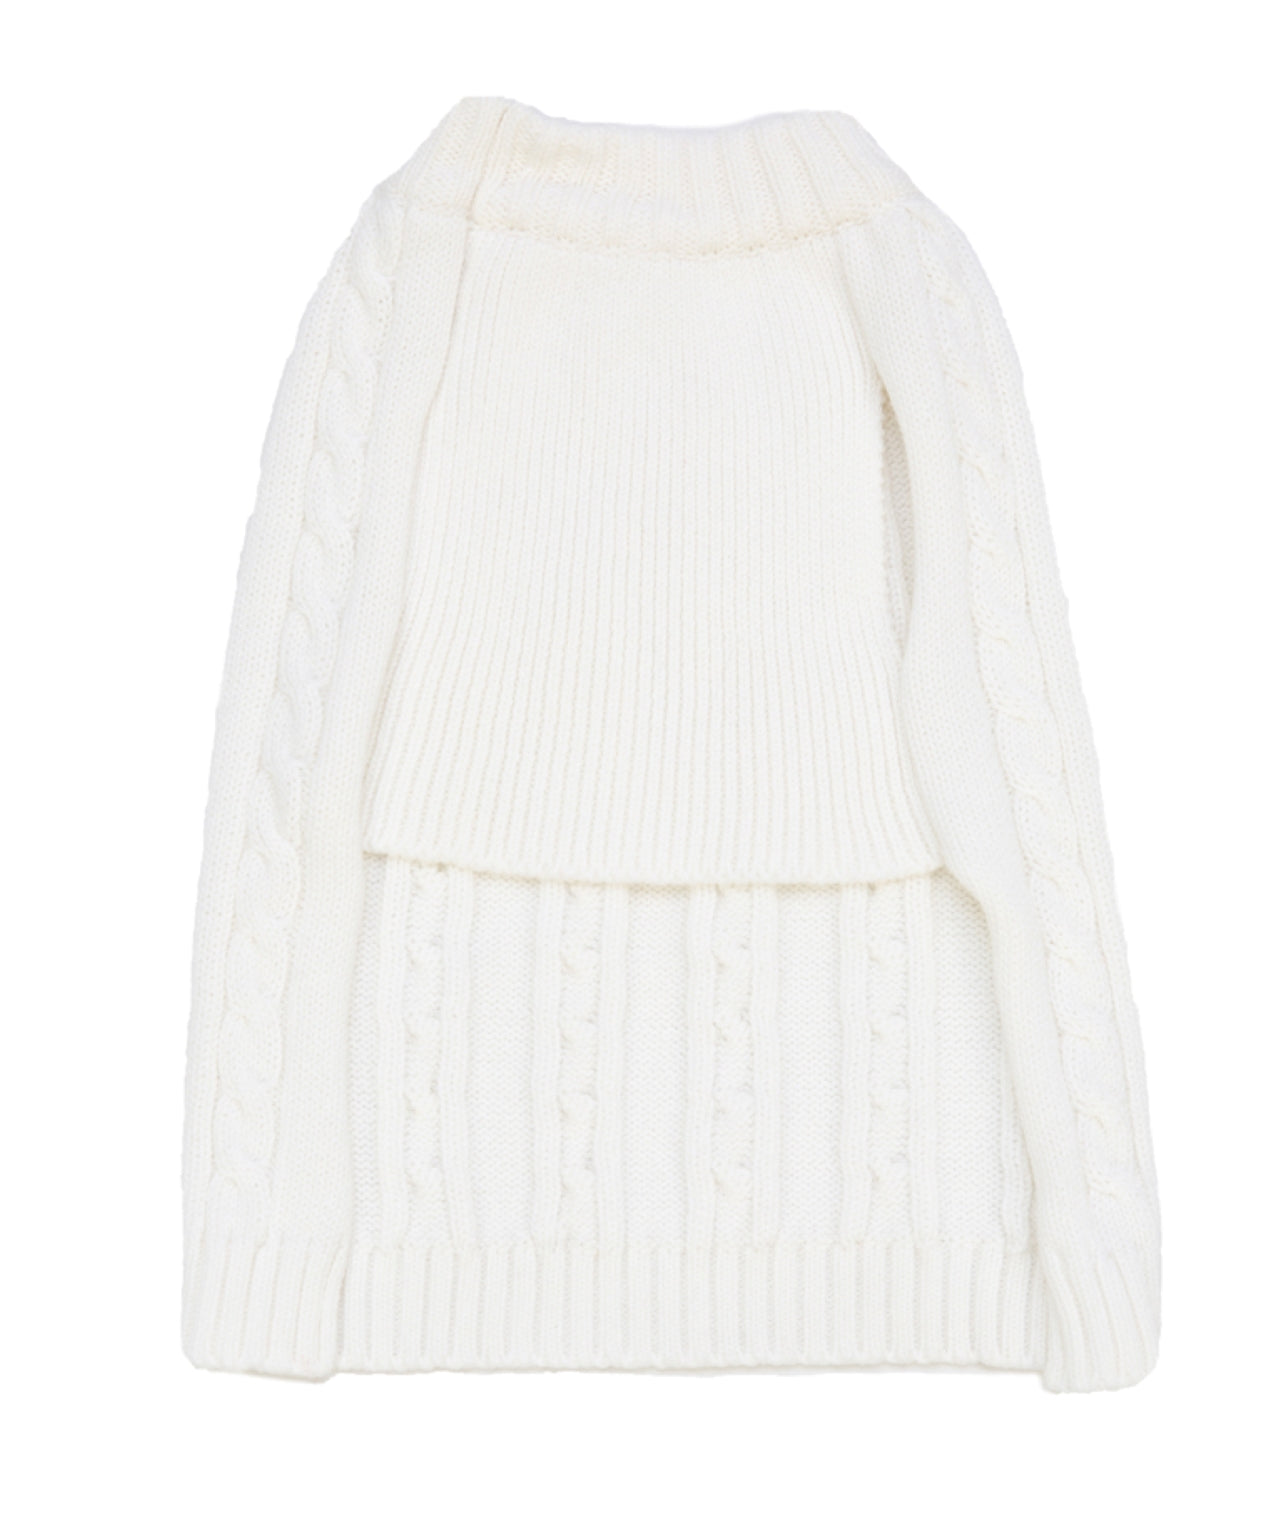 Imagewear White Dog Cable Sweater